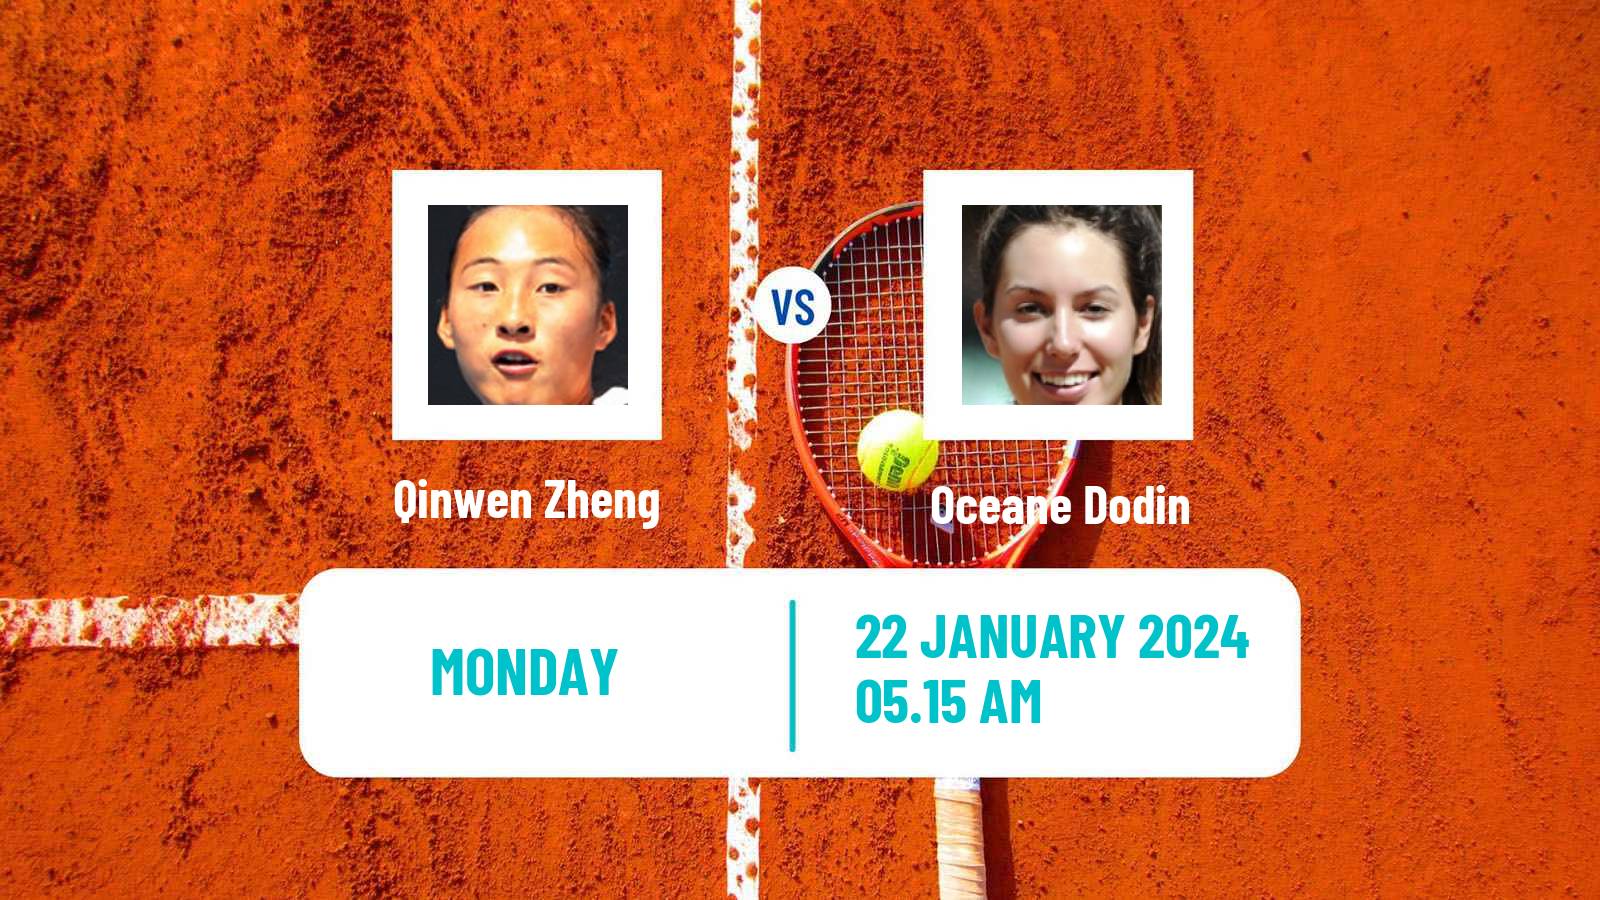 Tennis WTA Australian Open Qinwen Zheng - Oceane Dodin